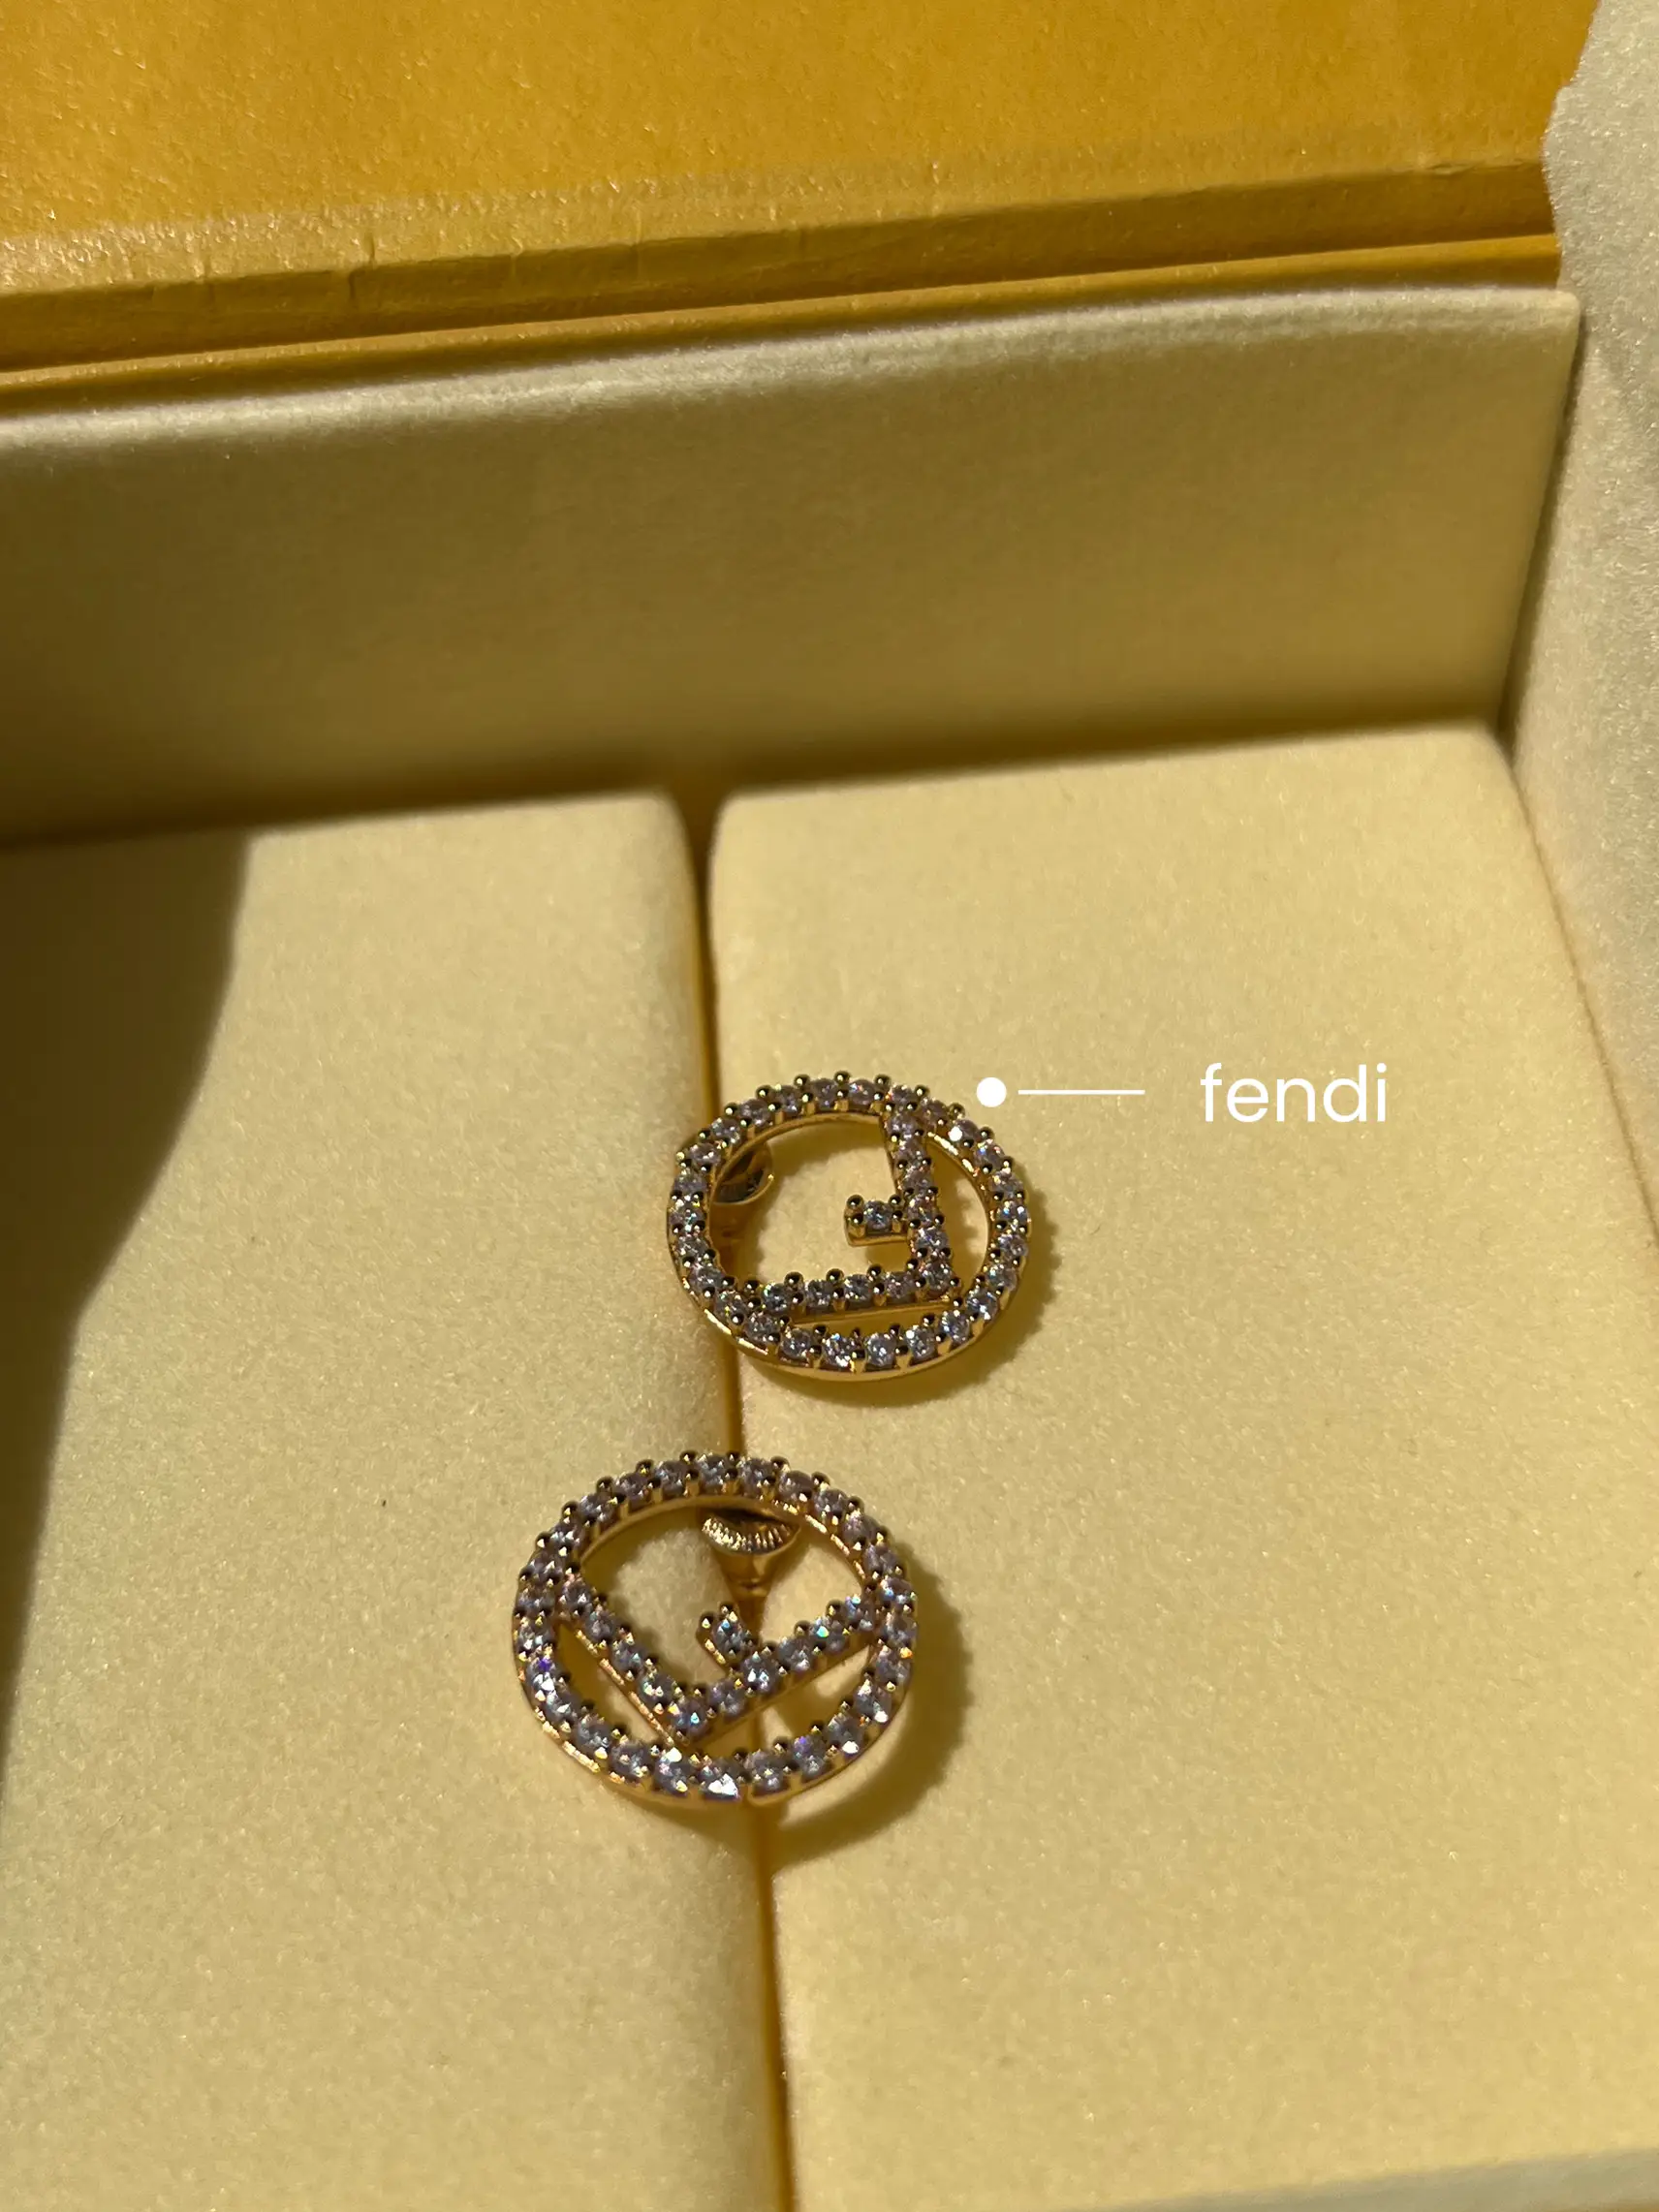 Luxury Earrings, DUPE Edition, Fendi